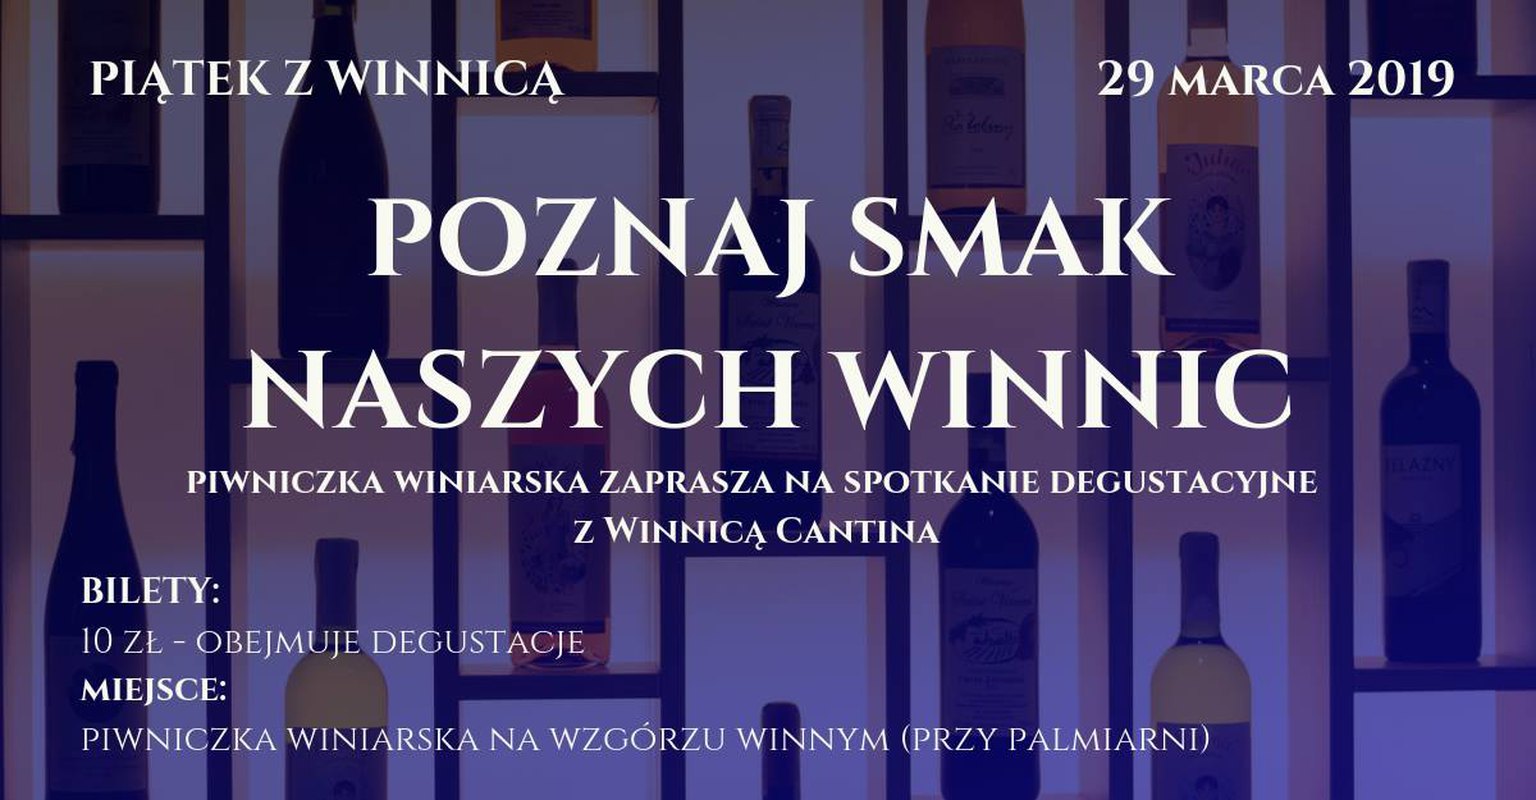 Piątek z Winnicą cz.9 - Winnica Cantina